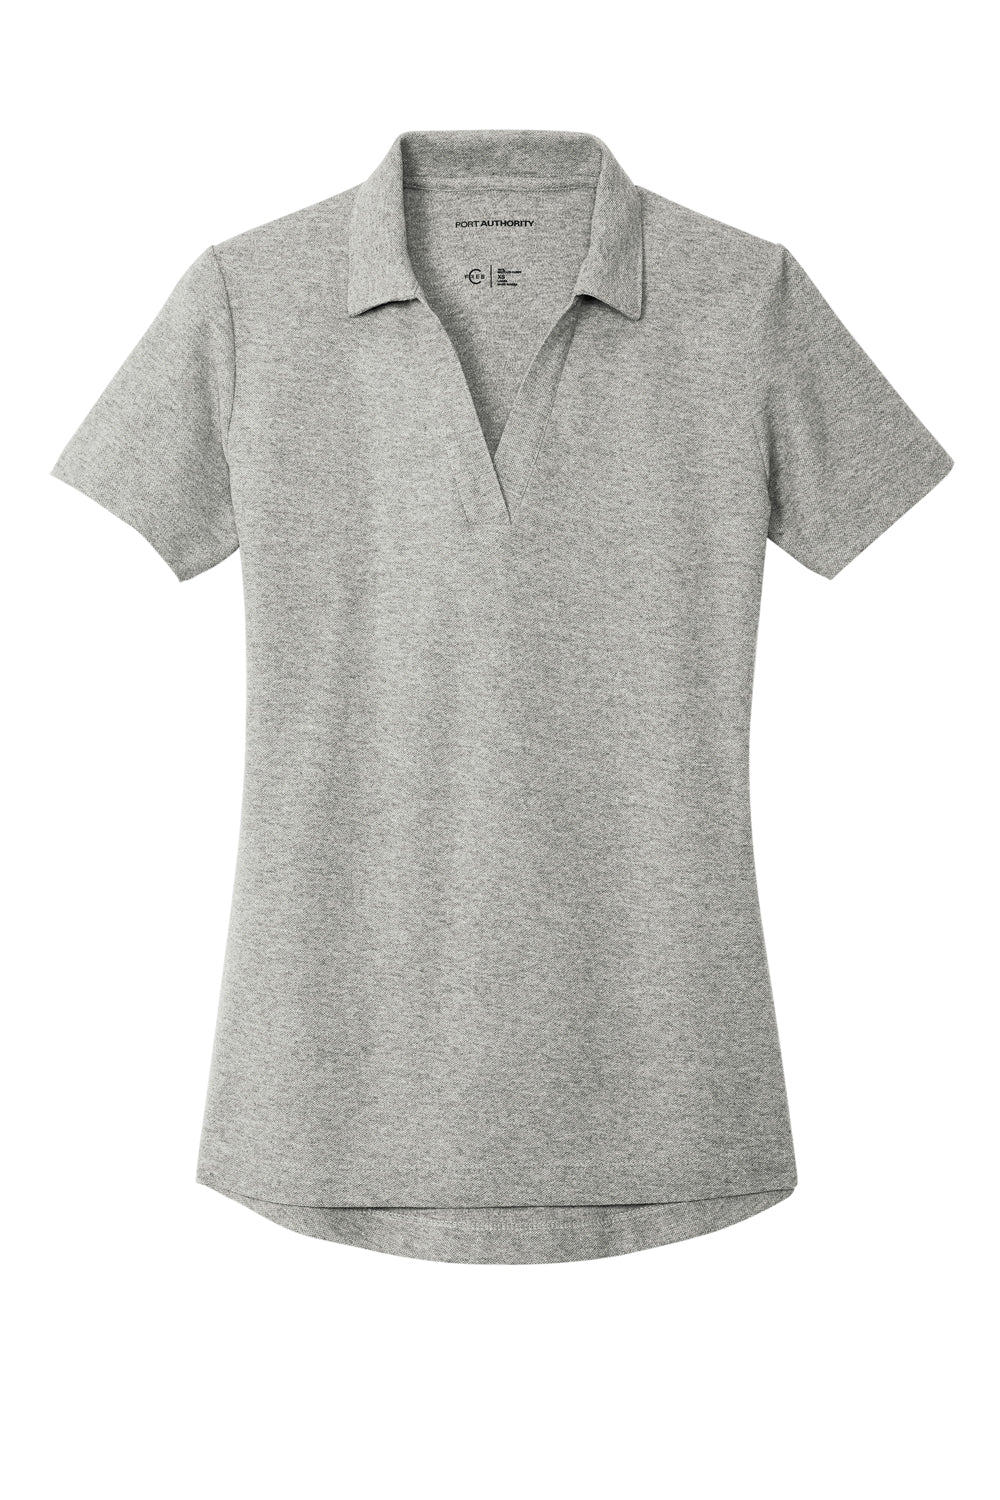 Port Authority LK867 Womens C-FREE Pique Short Sleeve Polo Shirt Heather Deep Smoke Grey Flat Front